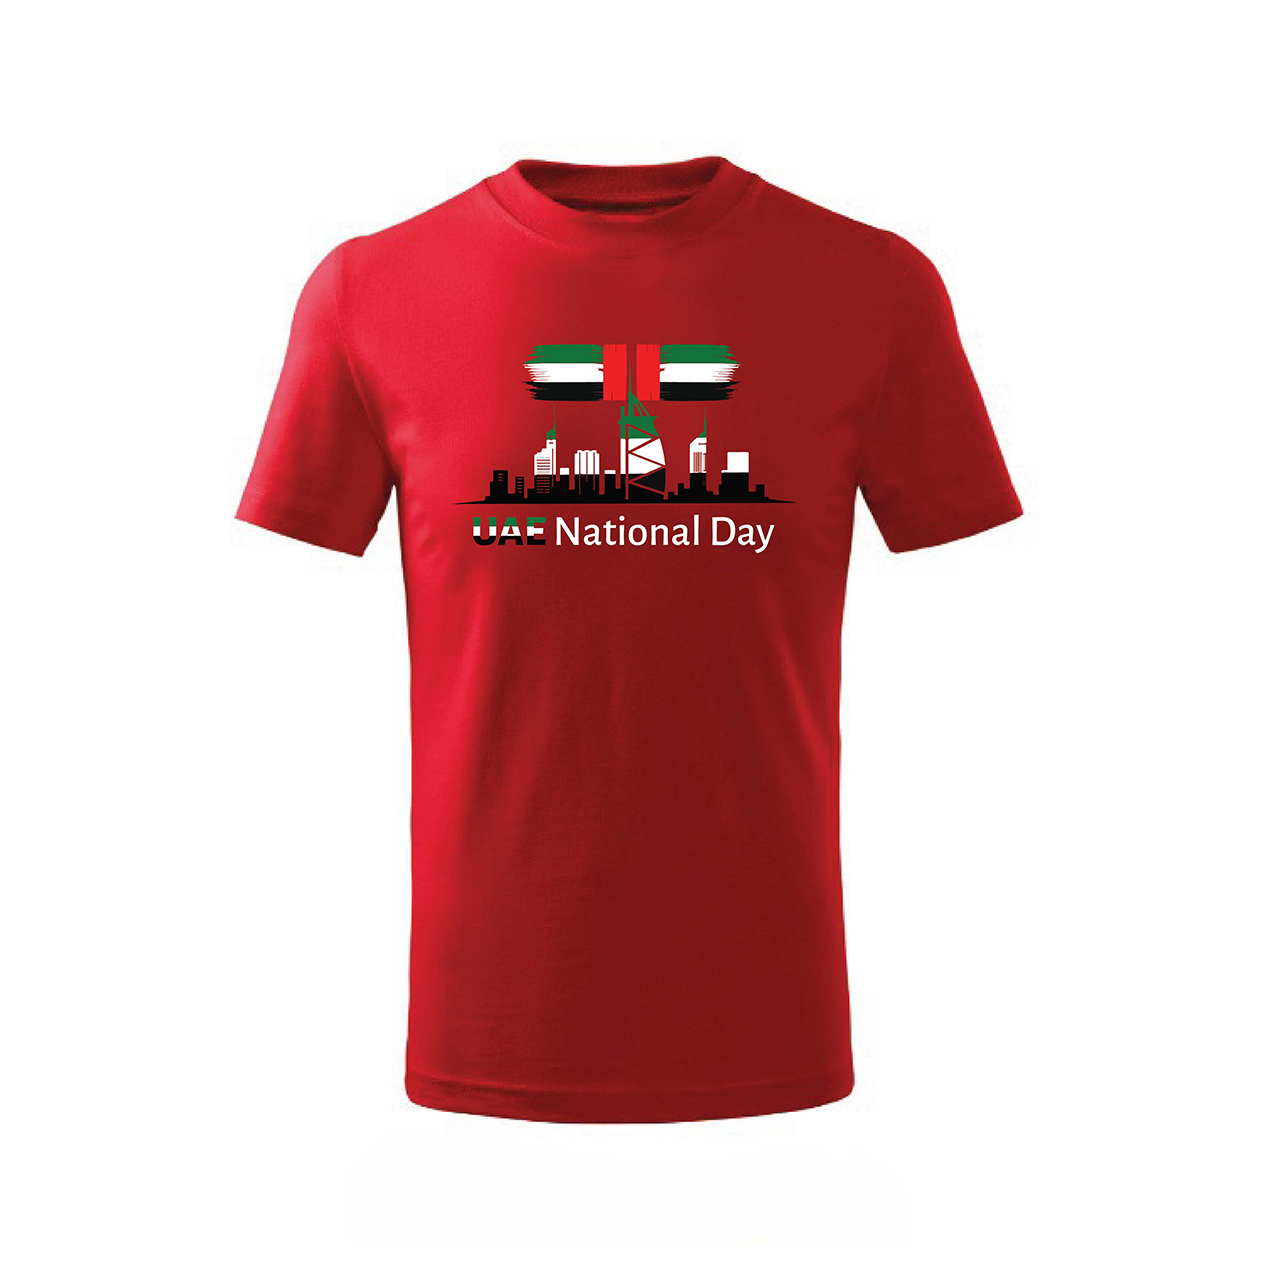 Uae national day t shirt design